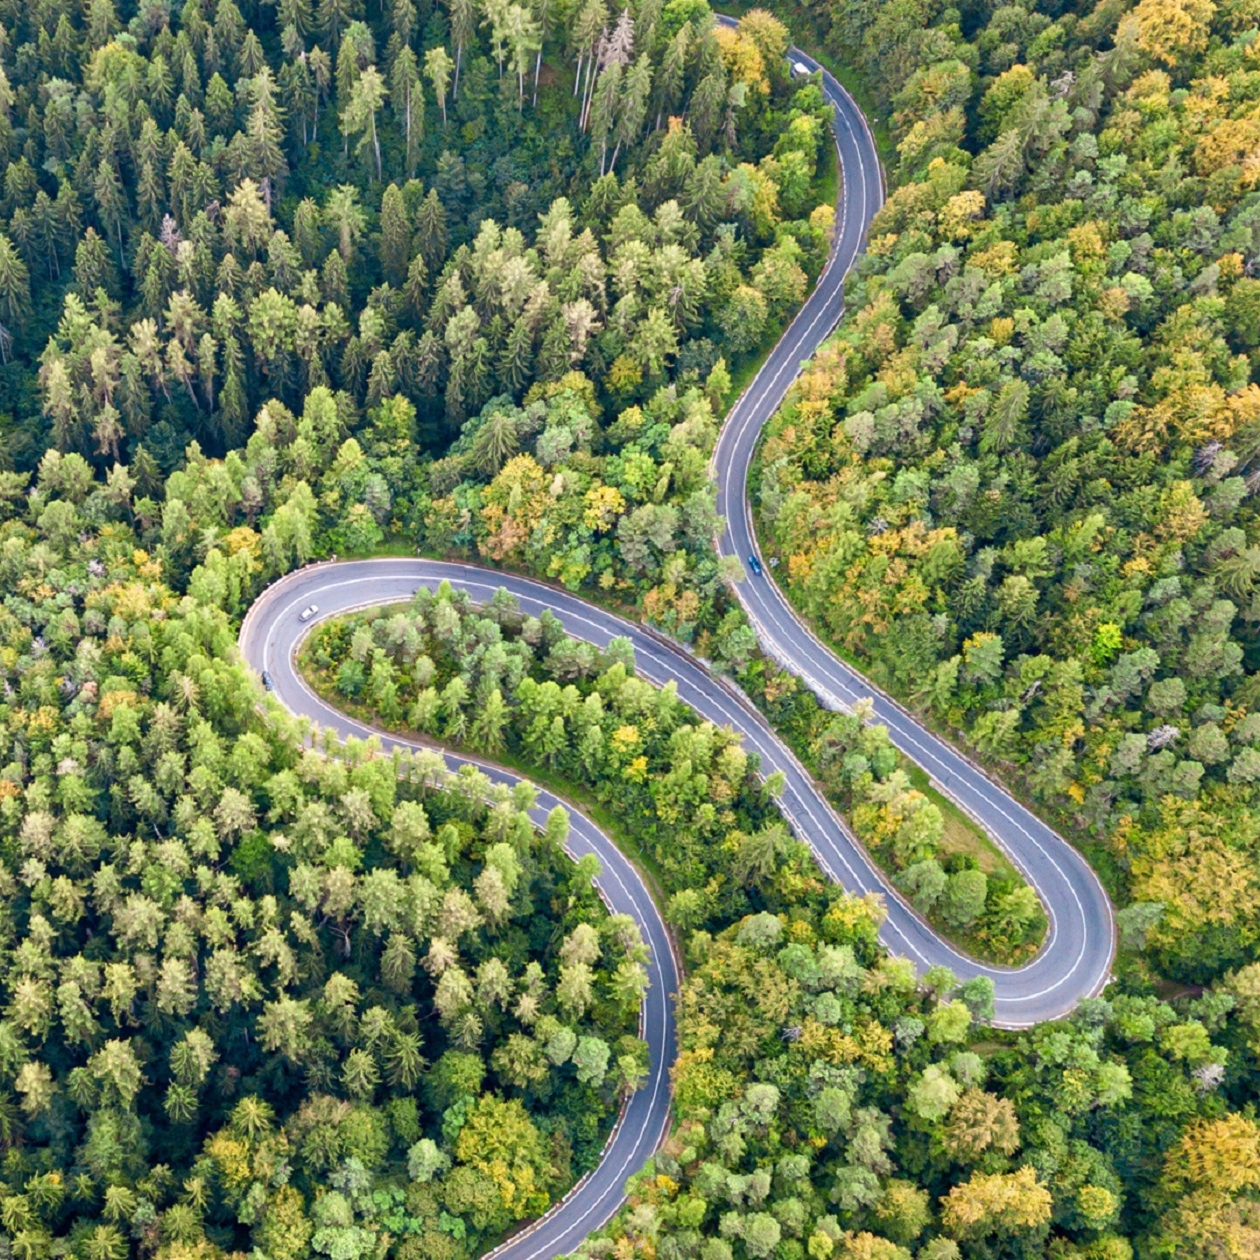 Carretera sinuosa a través de un bosque